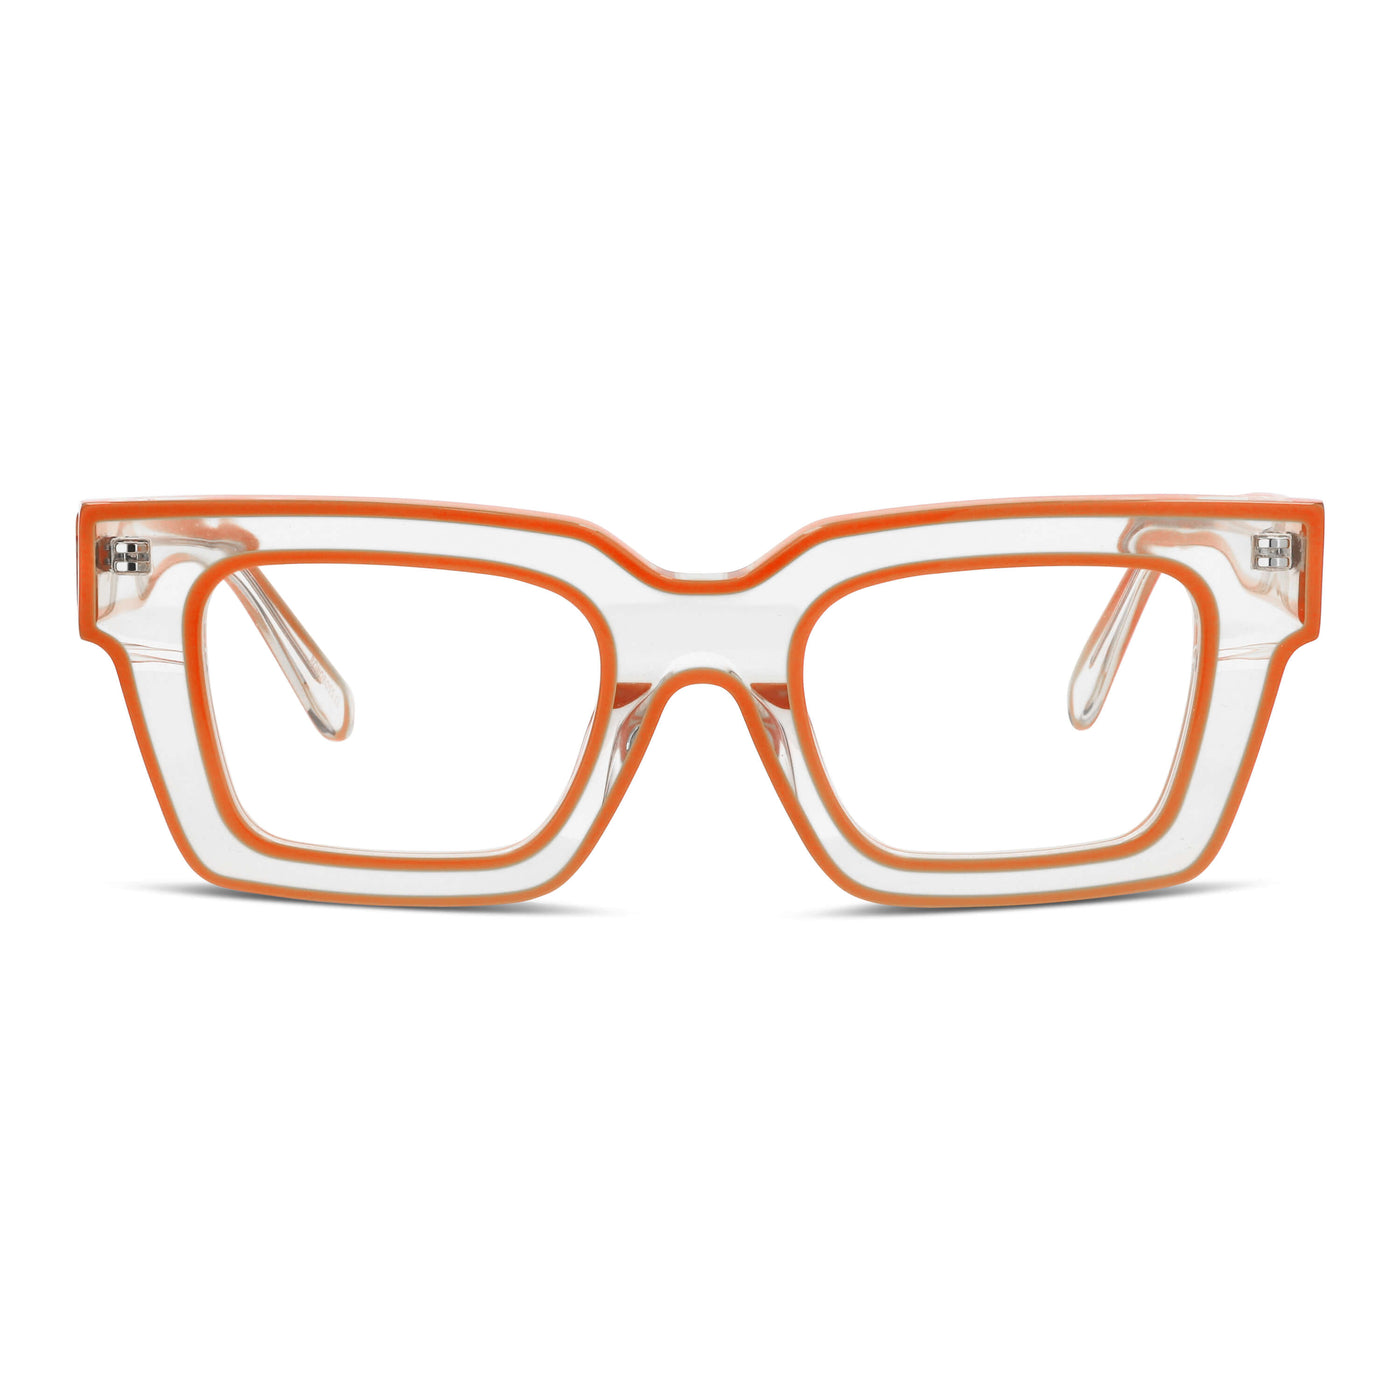  lentes diseñador exclusivo moda transarente orange rectangular hombre mujer receta opticos distribuidor mayorista opticas.jpg